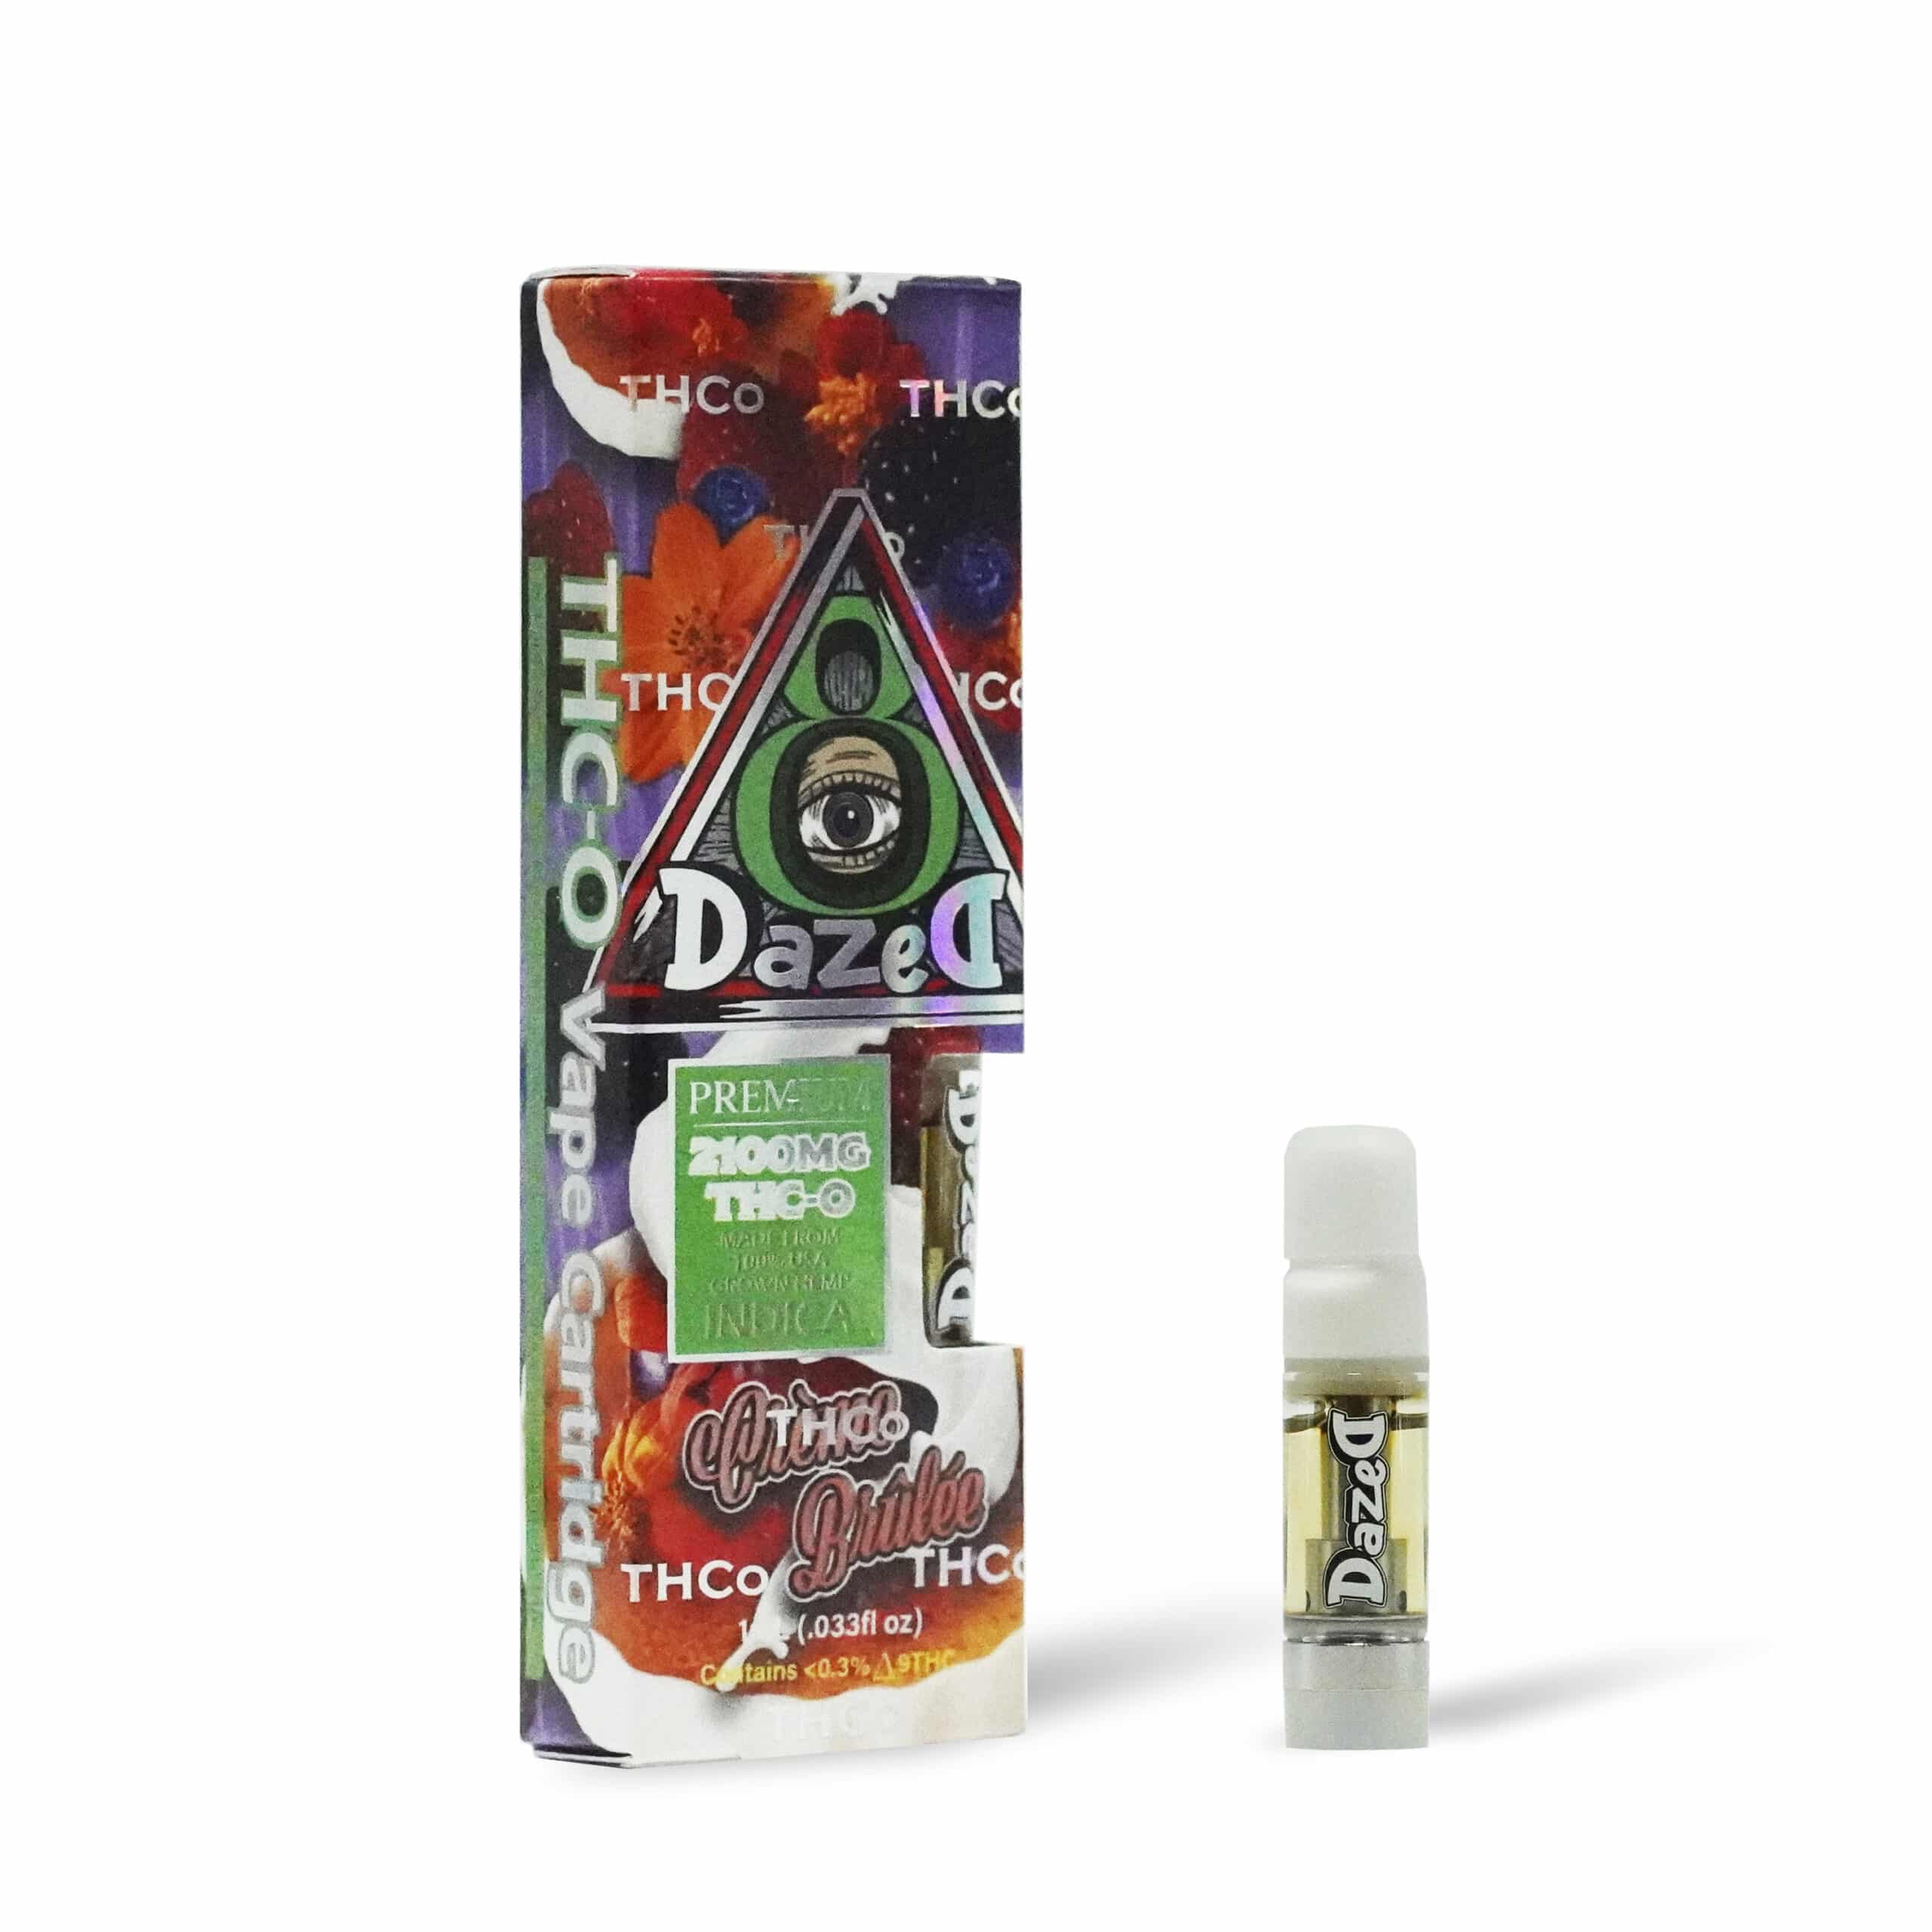 DazeD8 Creme Brulee Delta 8 THC-O Cartridge (2.1g) Best Price